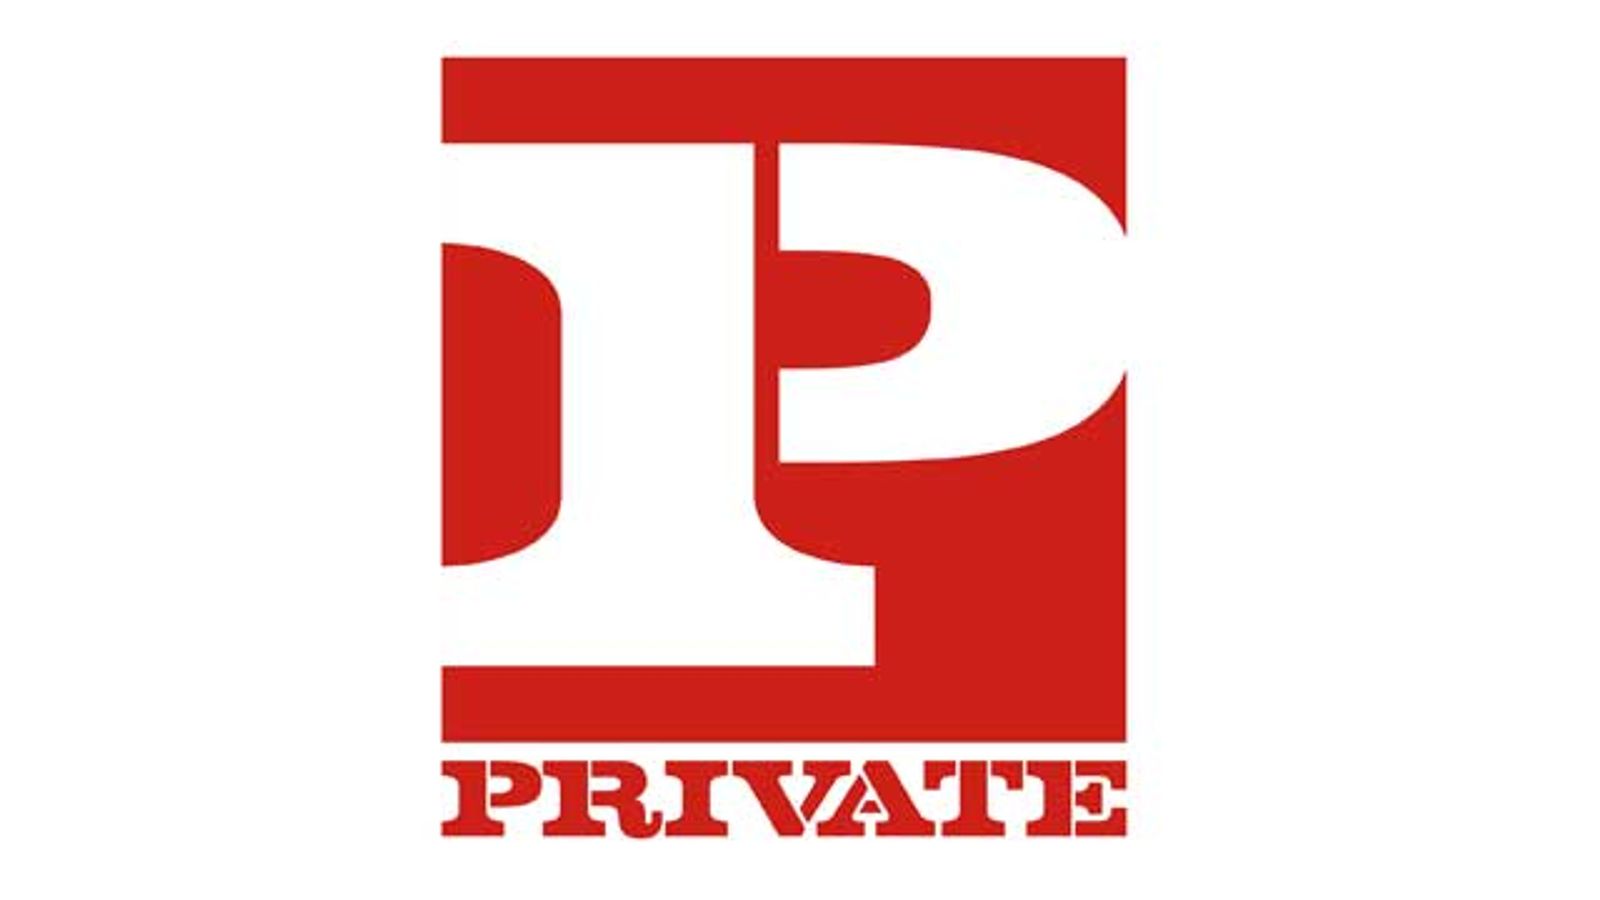 Private Unveils New Adult Entertainment Channel - PrivateTV